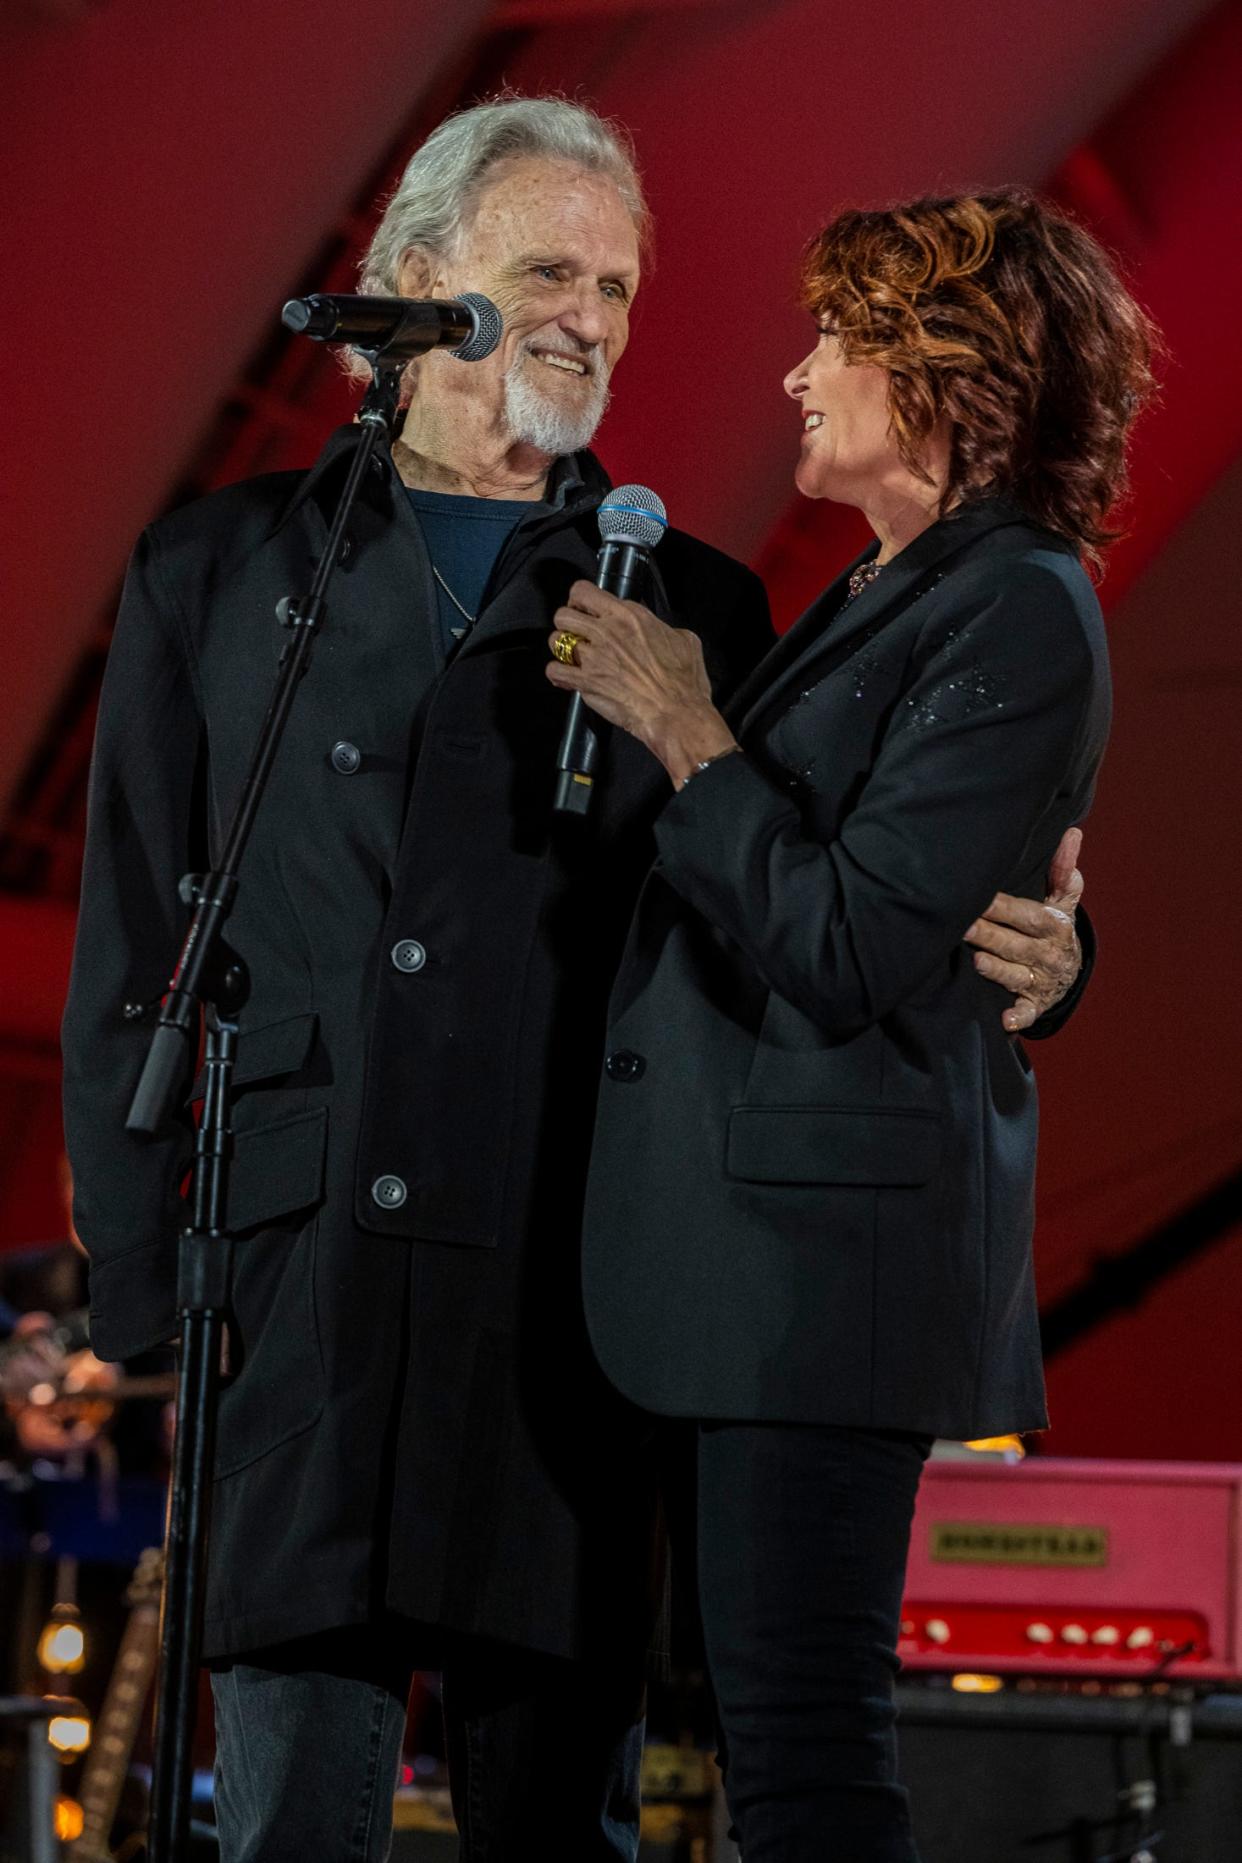 Kris Kristofferson and Rosanne Cash at Willie Nelson's birthday concert.